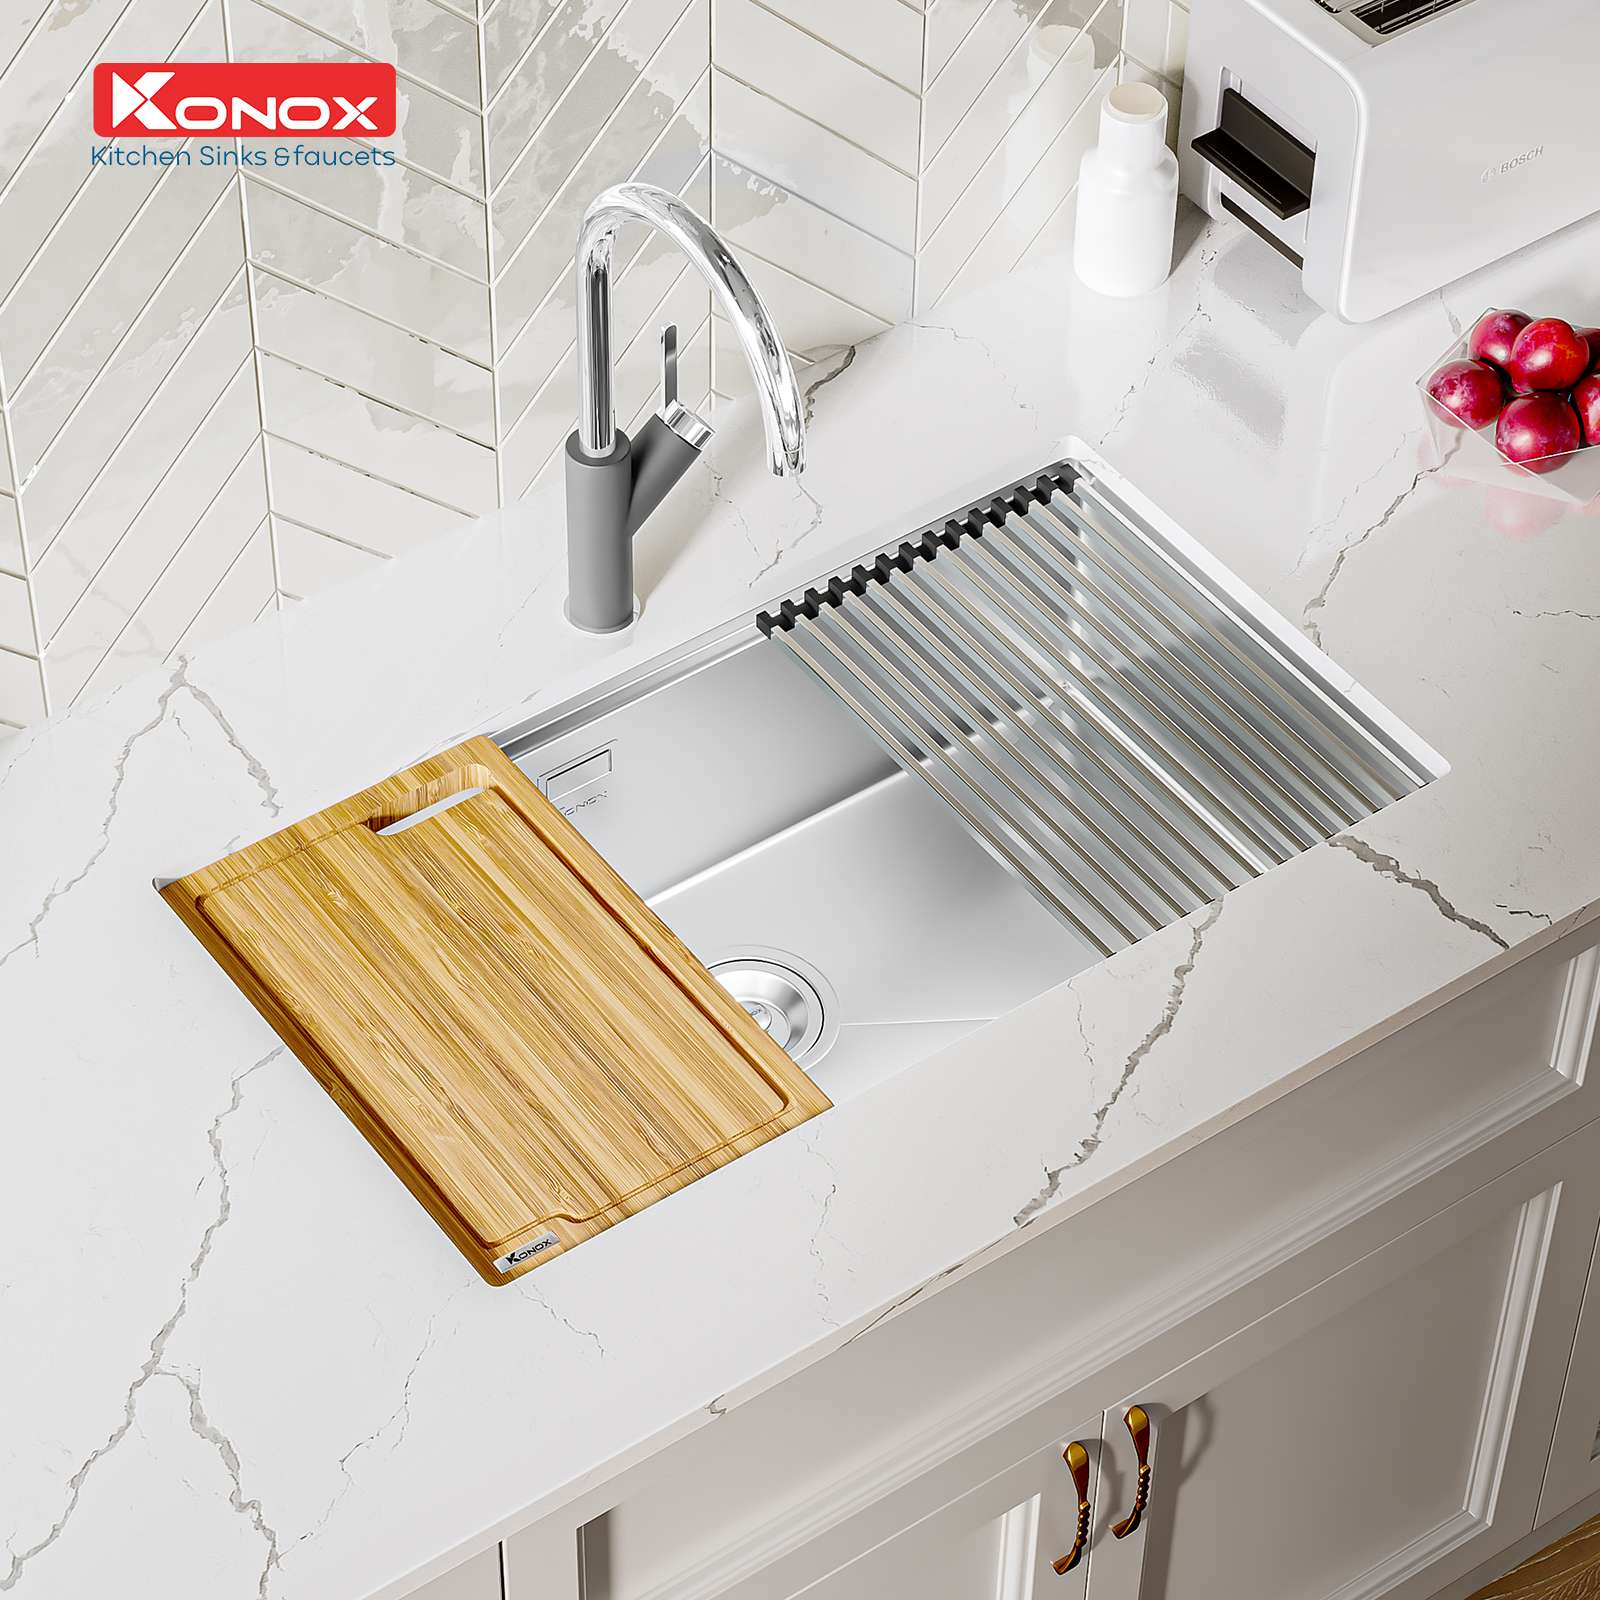 Chậu rửa bát Konox Workstation Sink – Undermount Sink KN8046SU